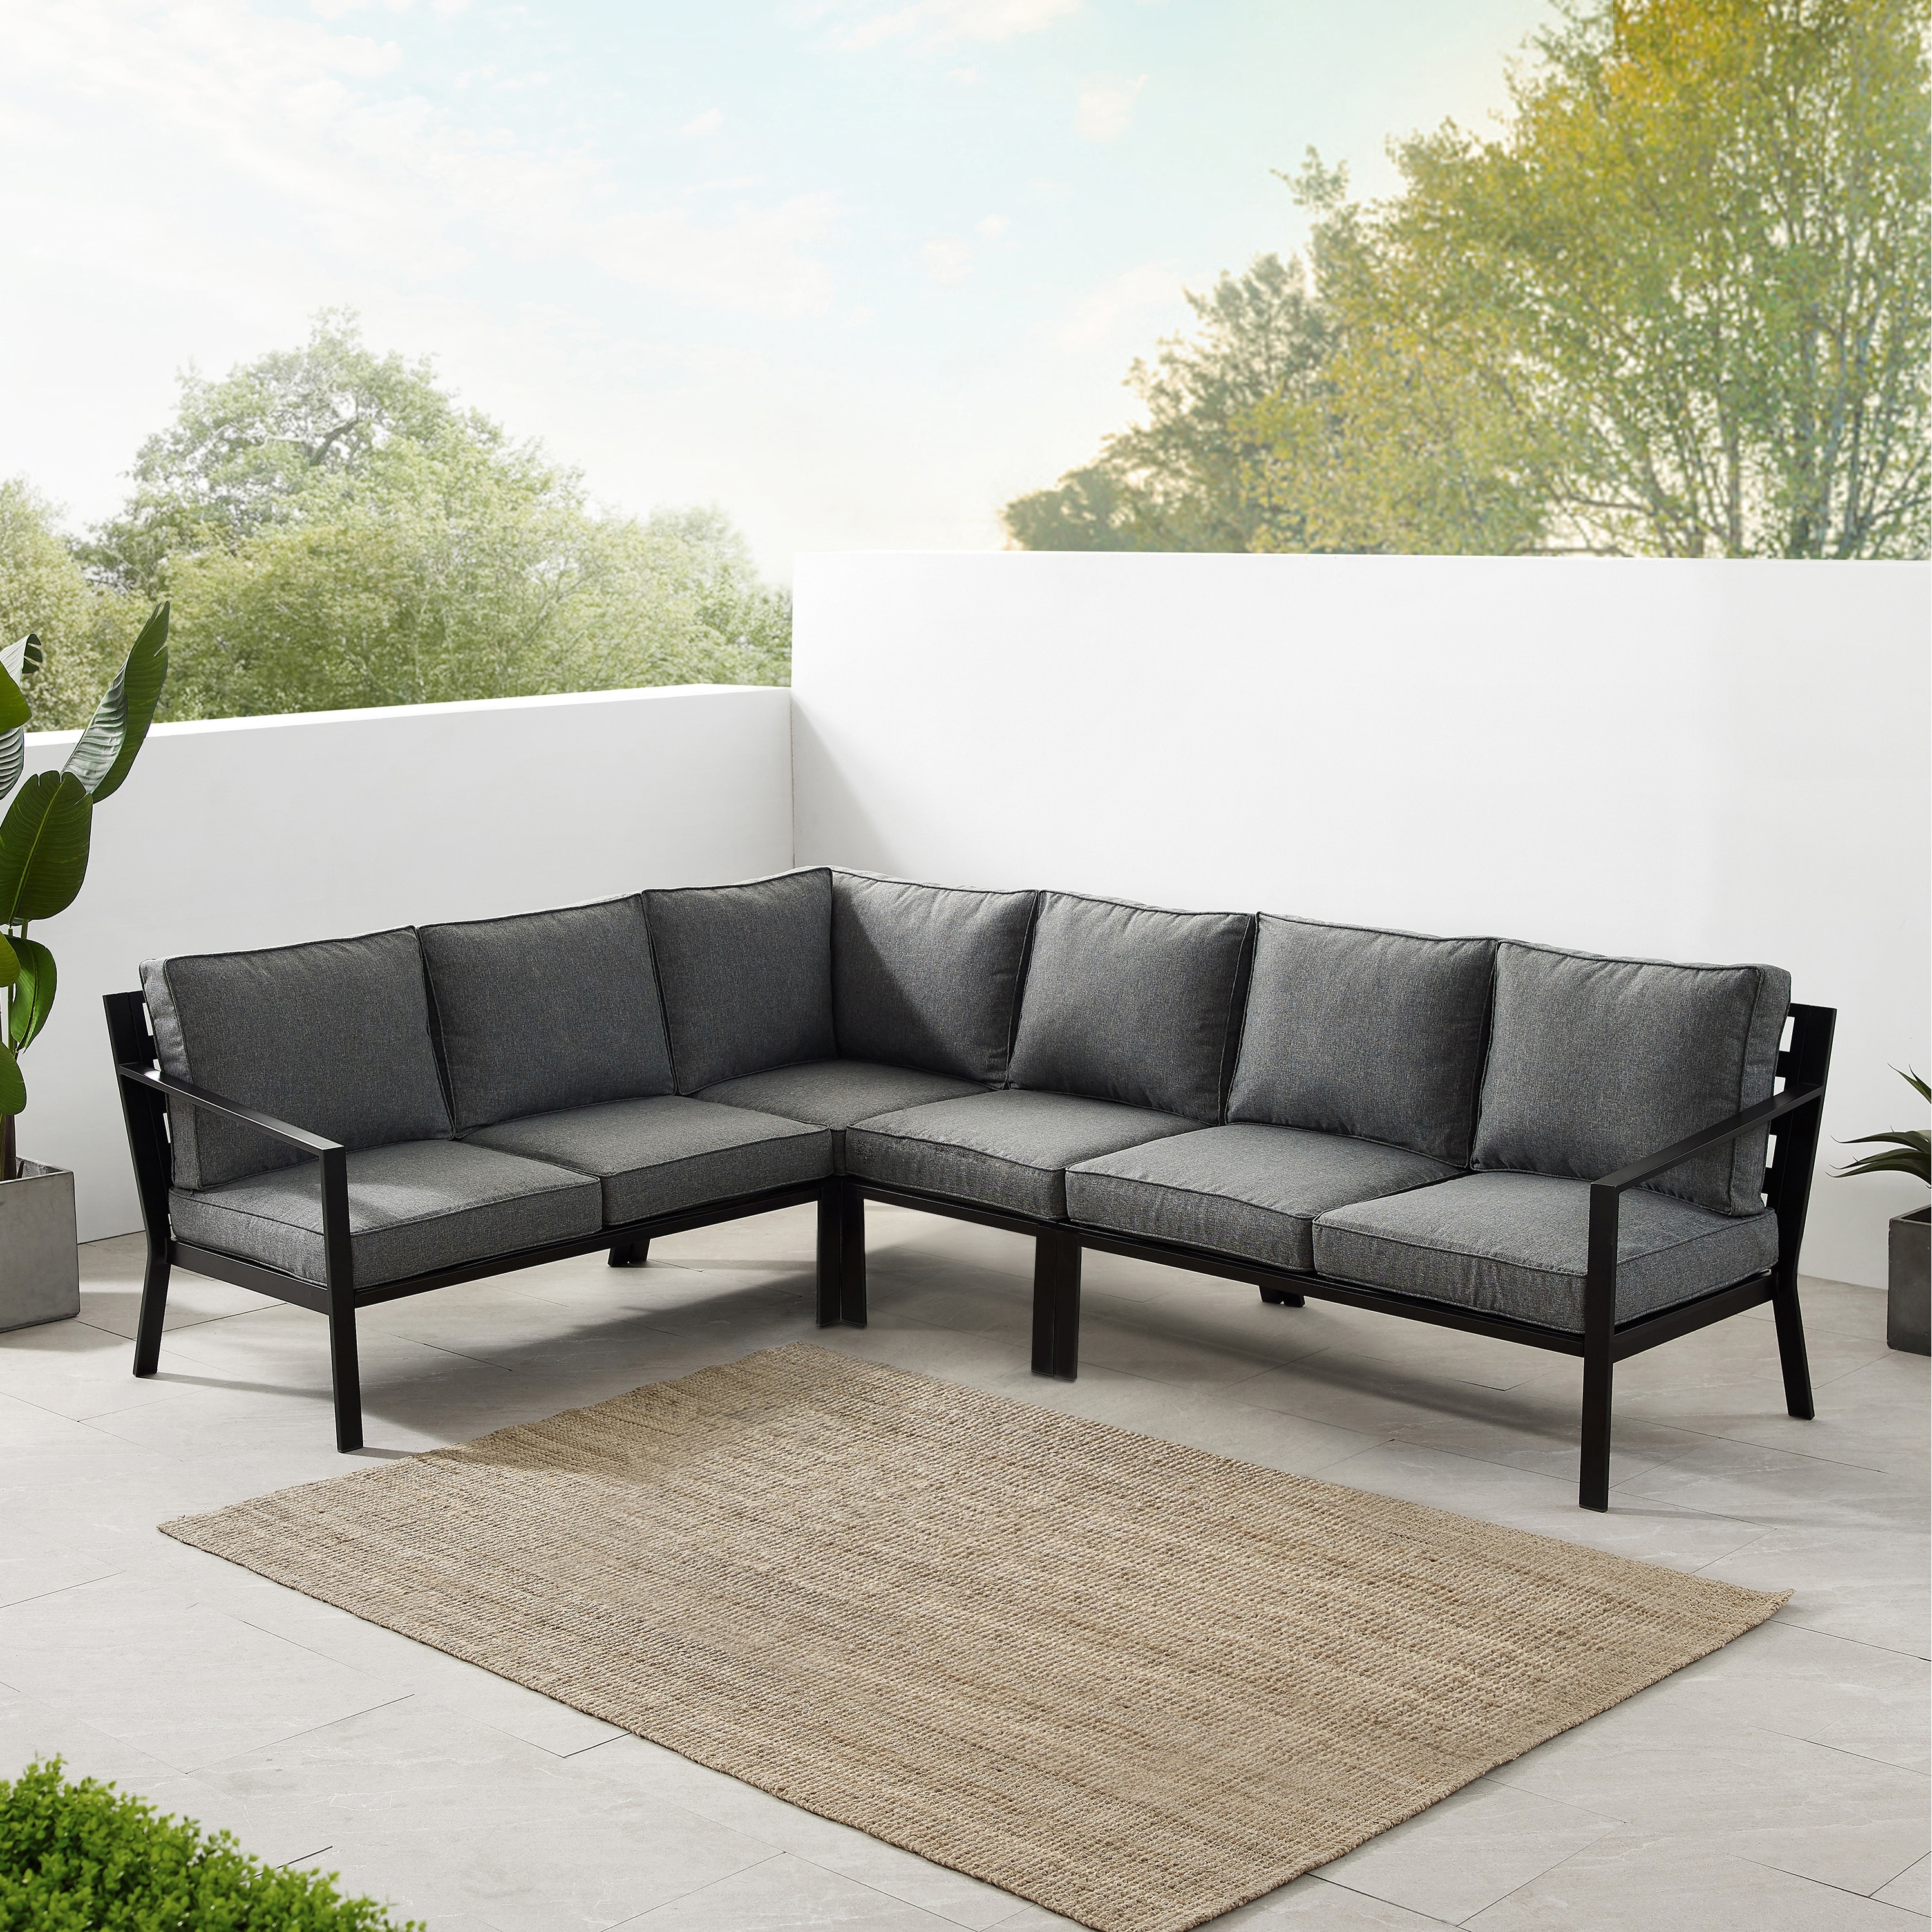 Clark 4pc Metal Outdoor Sectional Patio Furniture Set